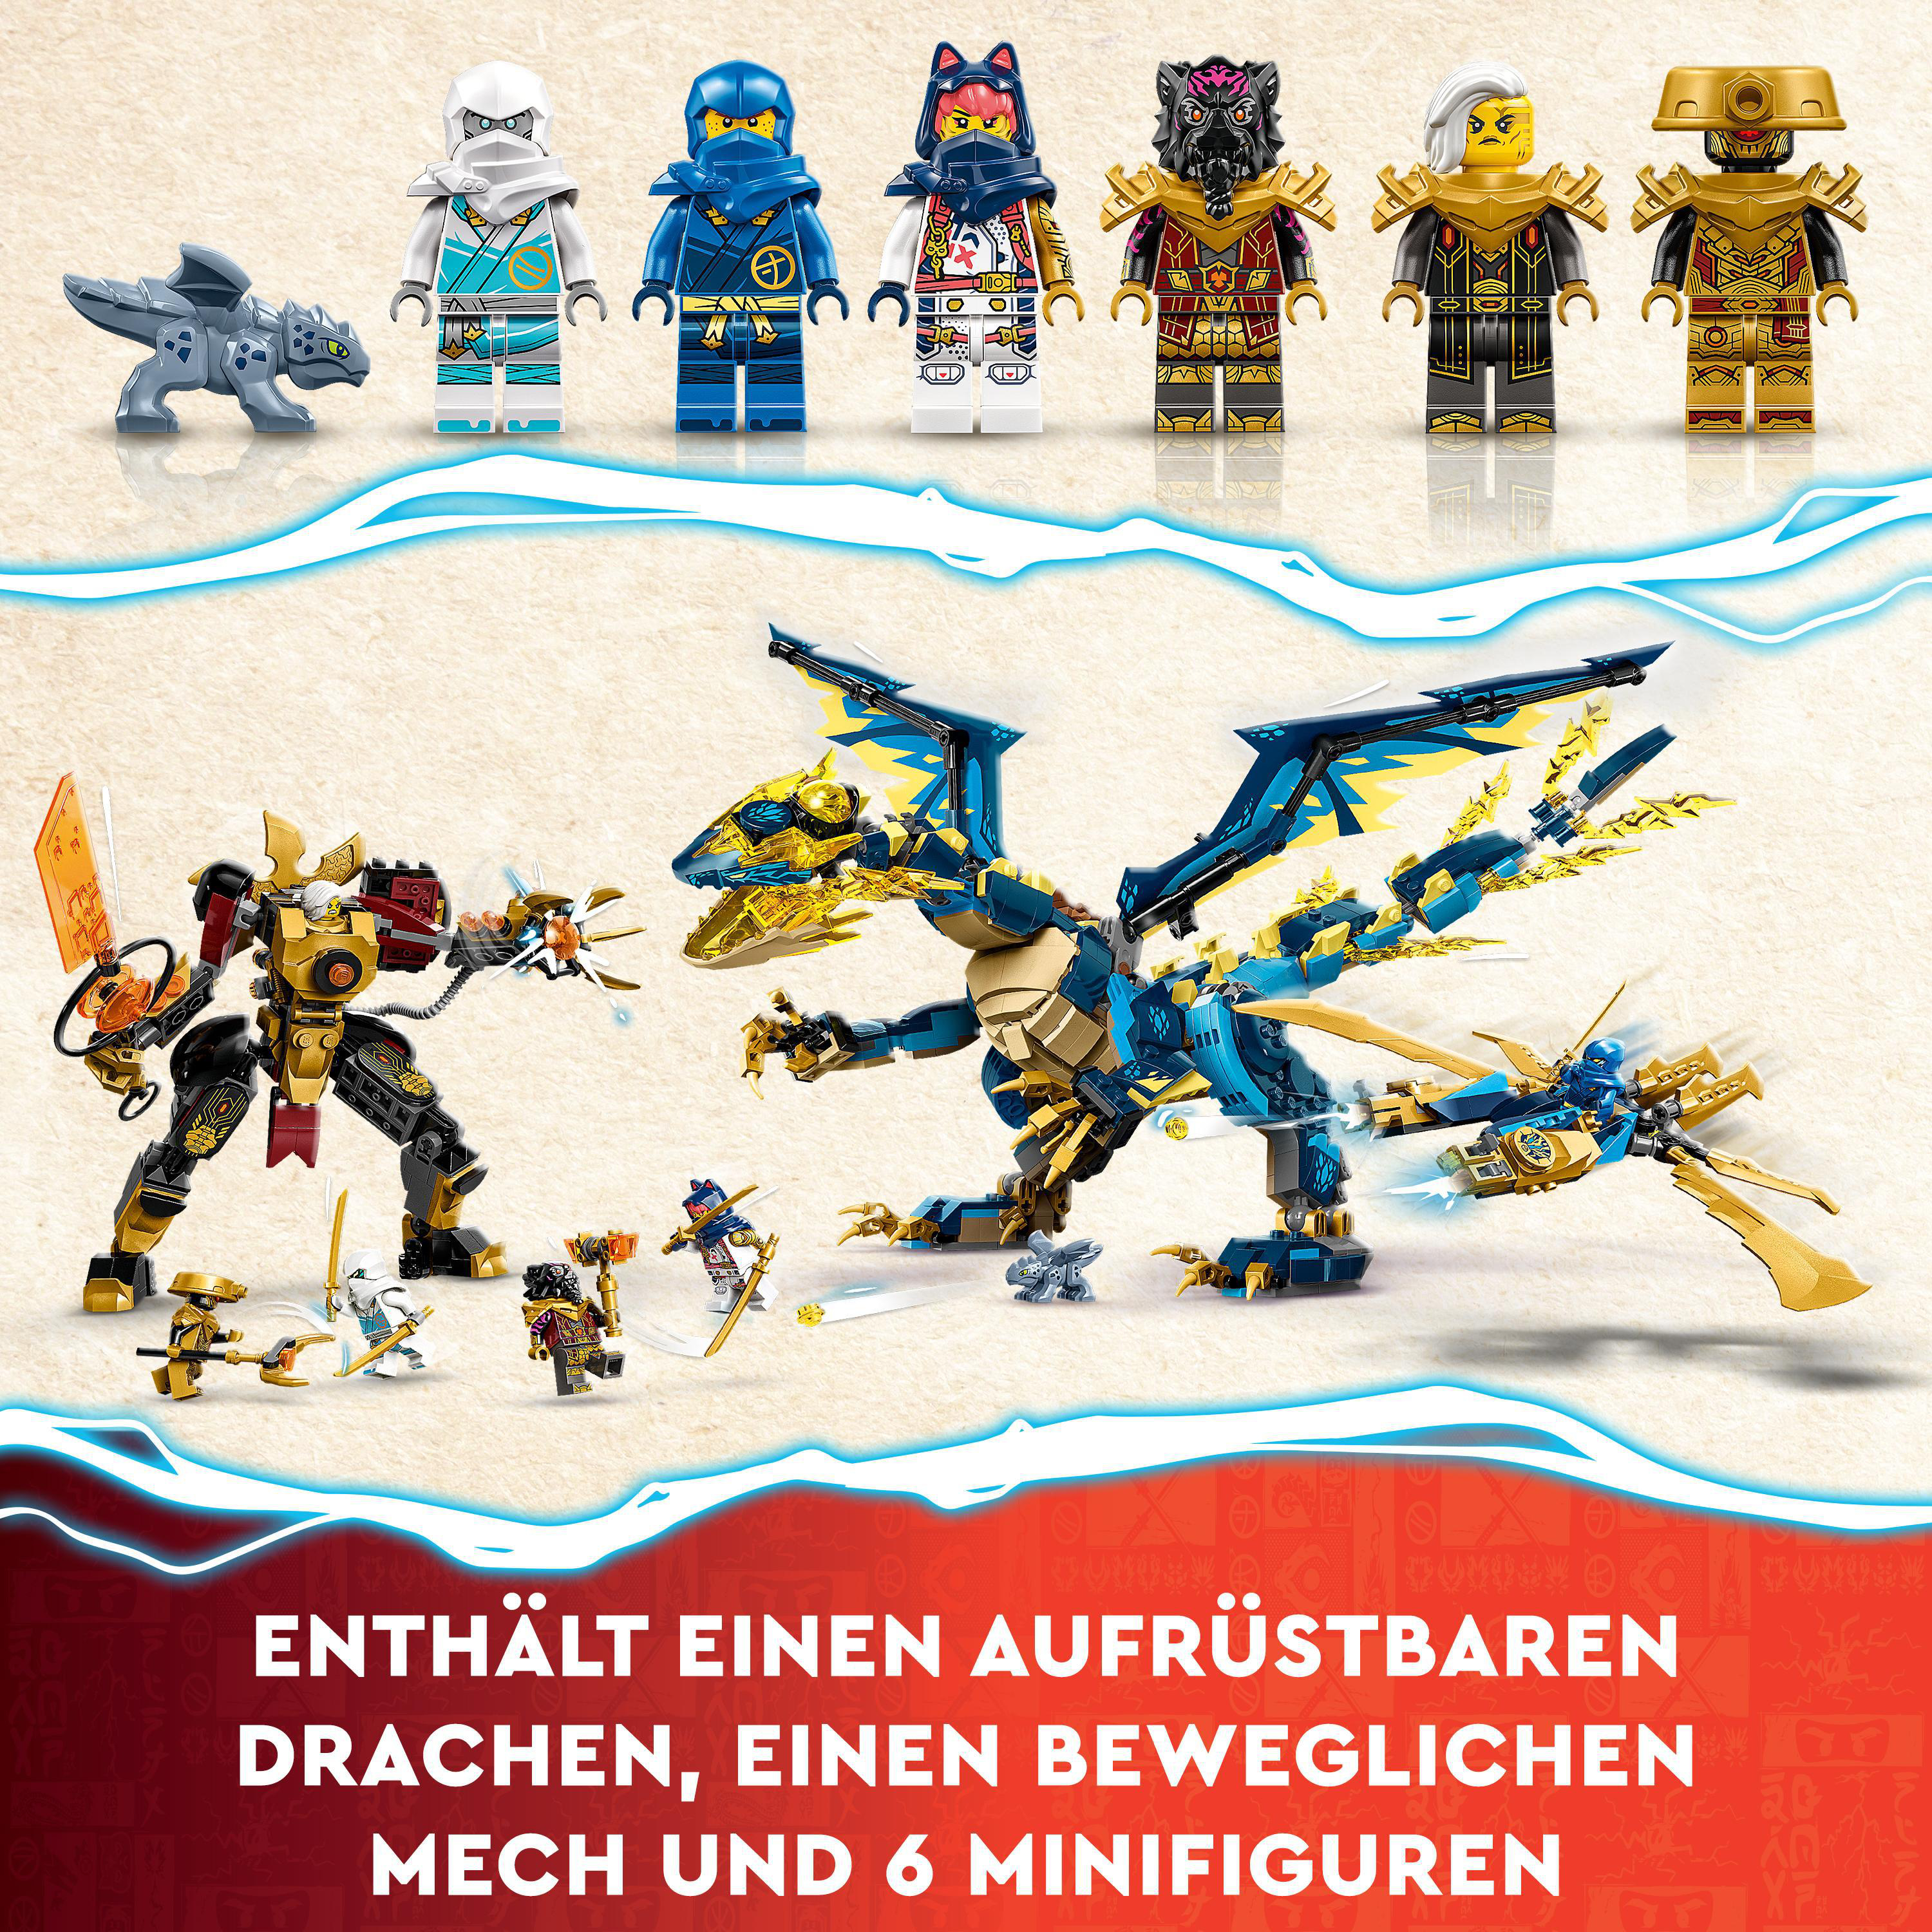 den gegen LEGO 71796 NINJAGO Bausatz, Mech-Duell Kaiserliches Mehrfarbig Elementardrachen